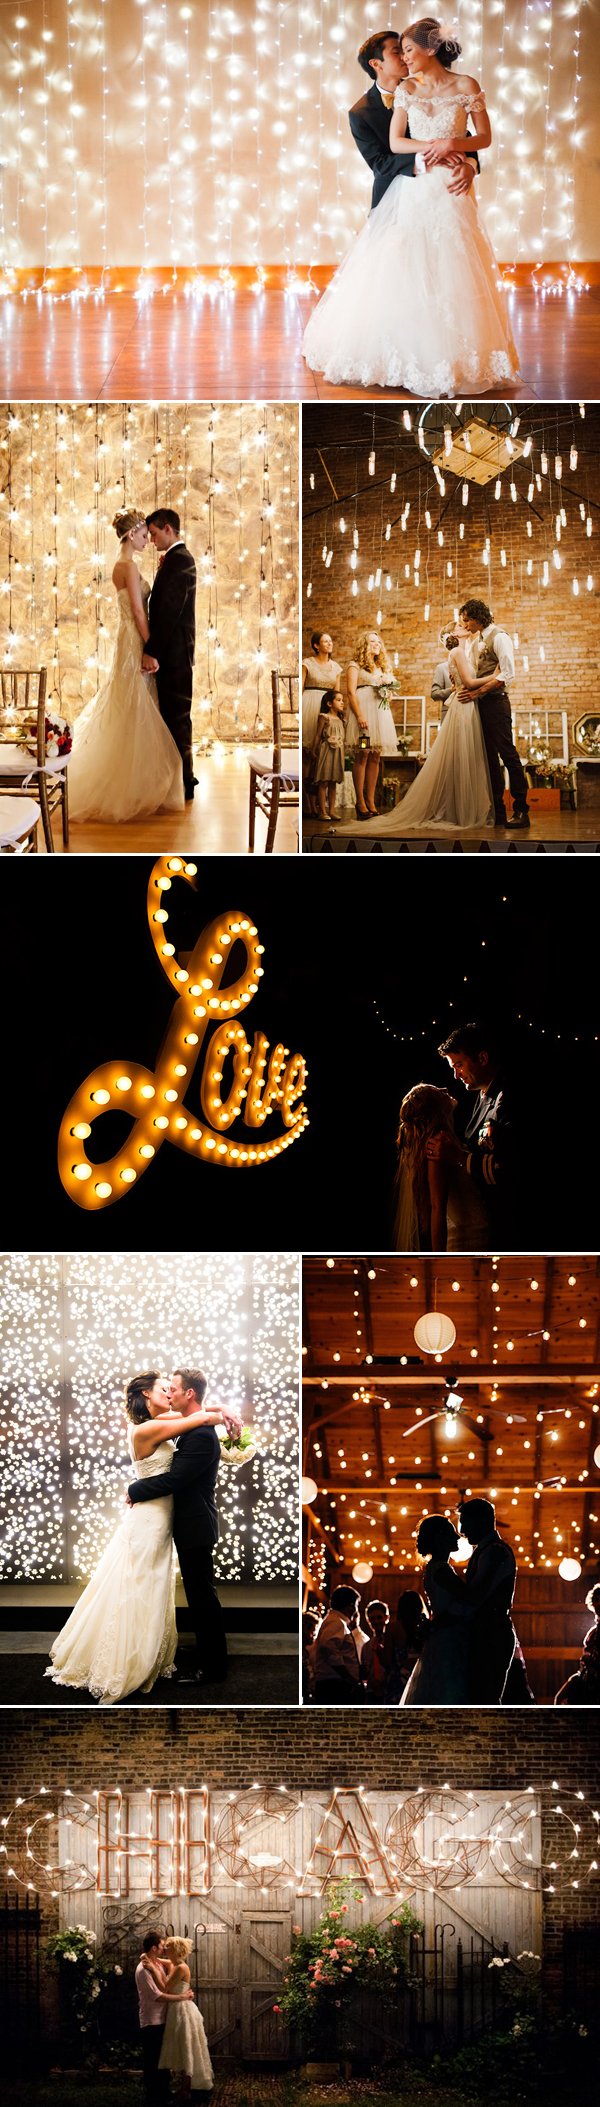 Indoor Light Wedding Backdrop Decoration Ideas